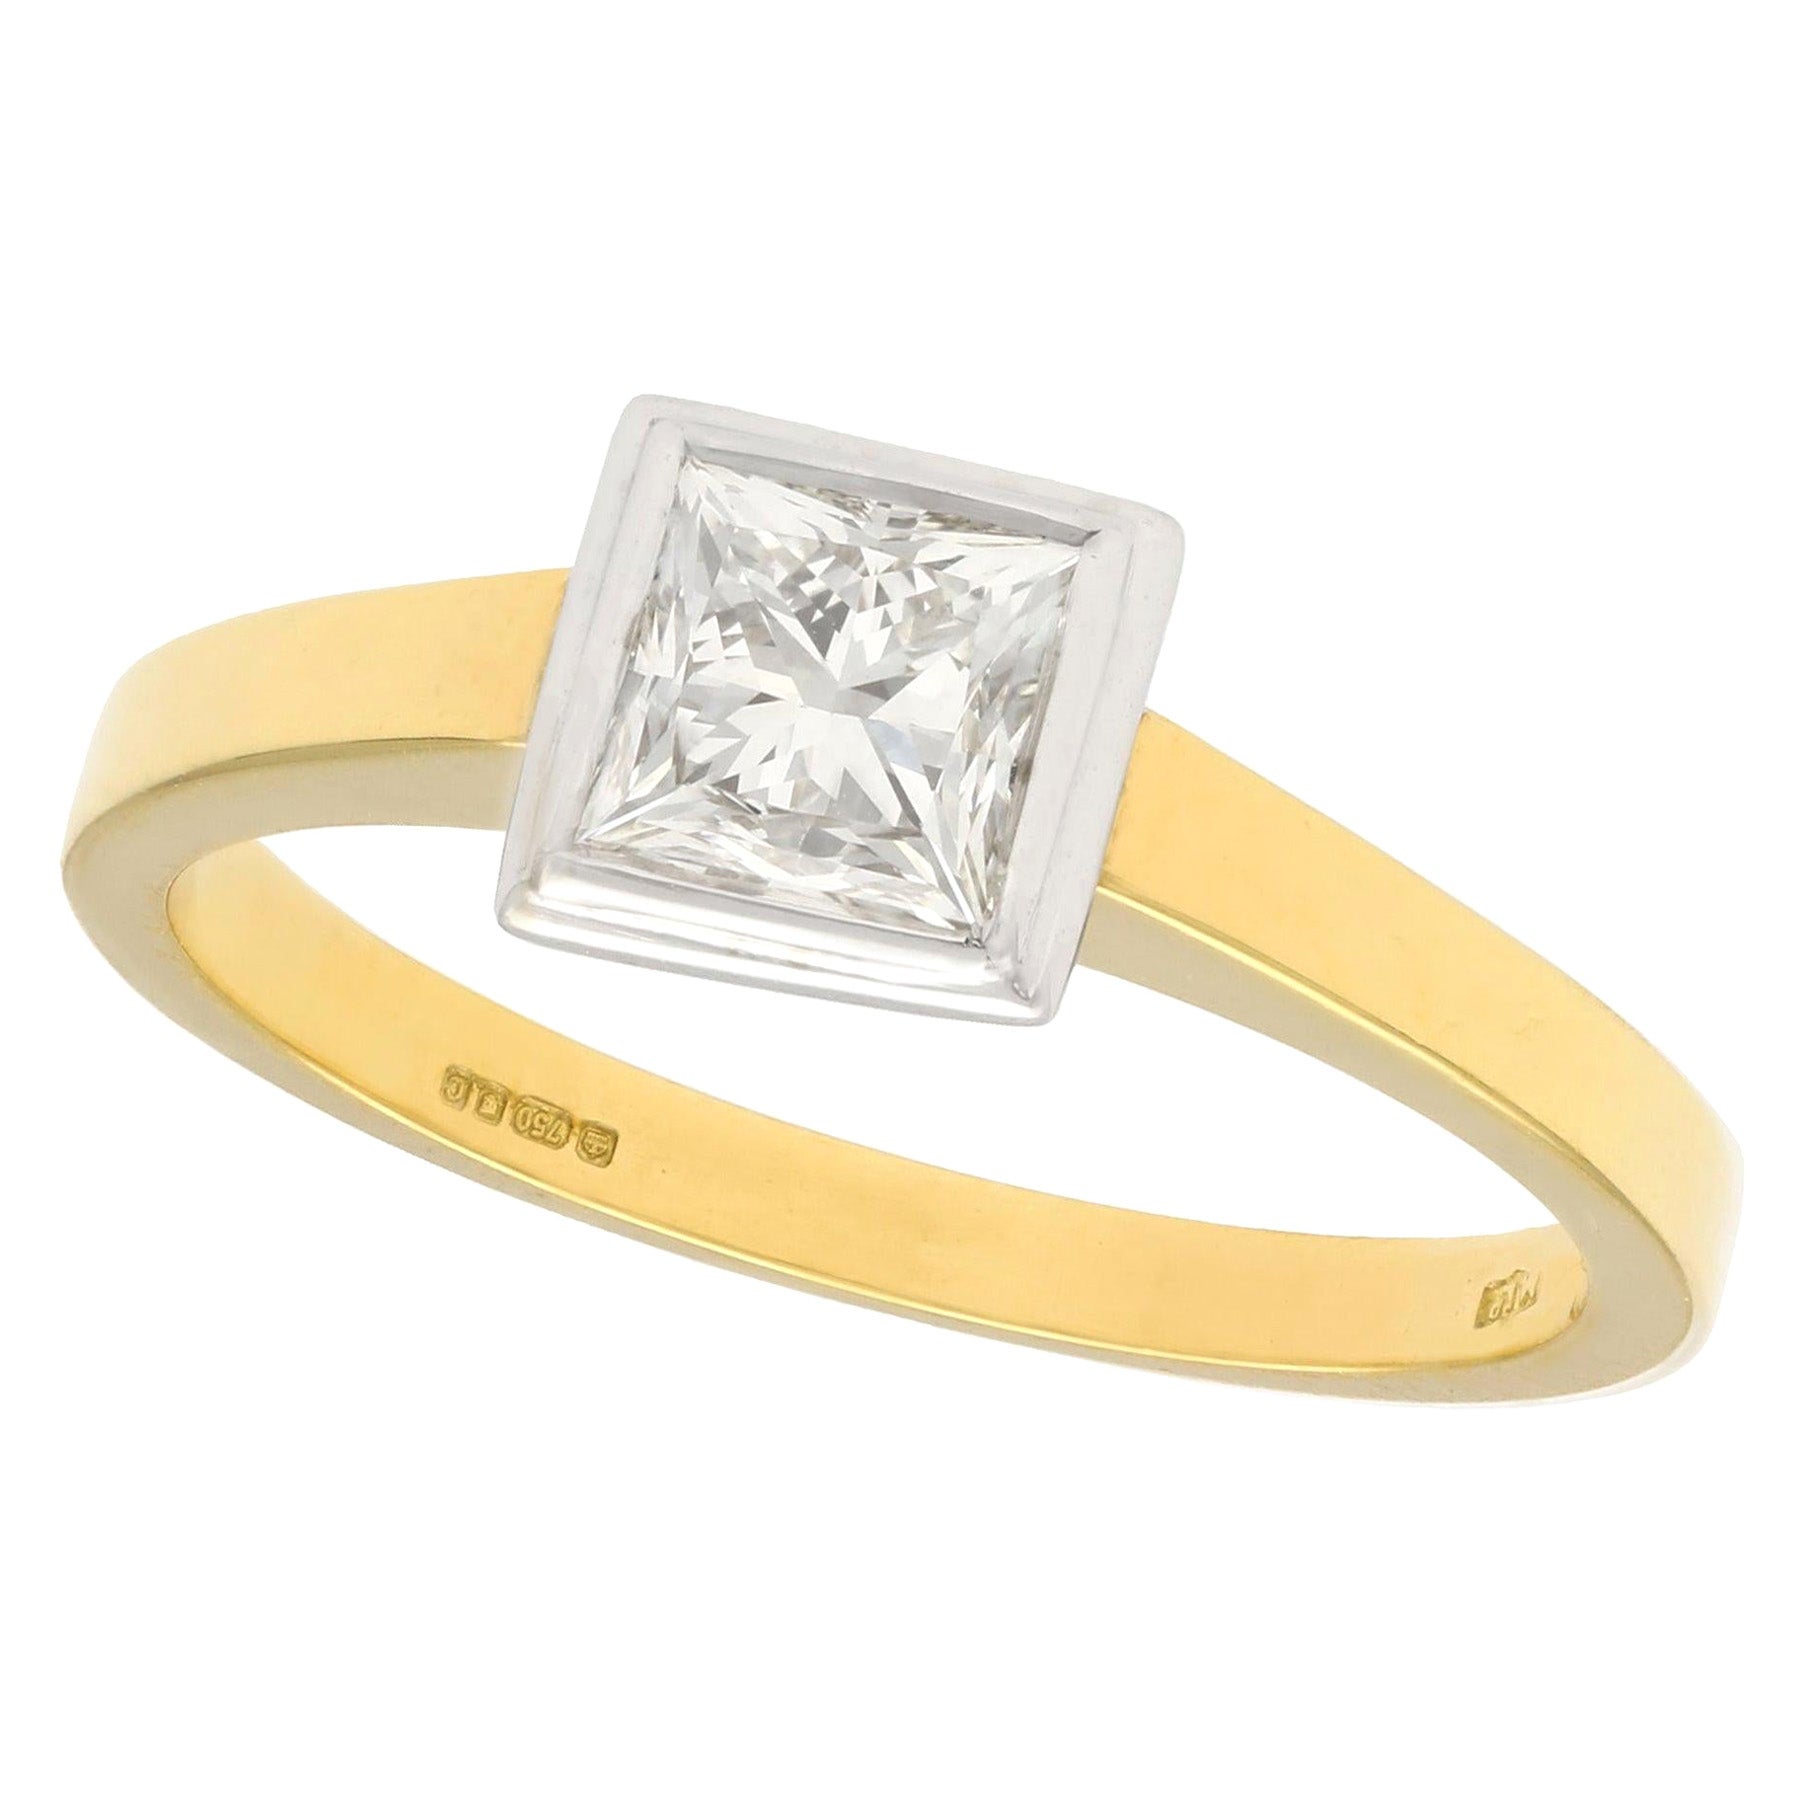 Princess Cut 1.10 Carat Diamond Yellow Gold Solitaire Engagement Ring